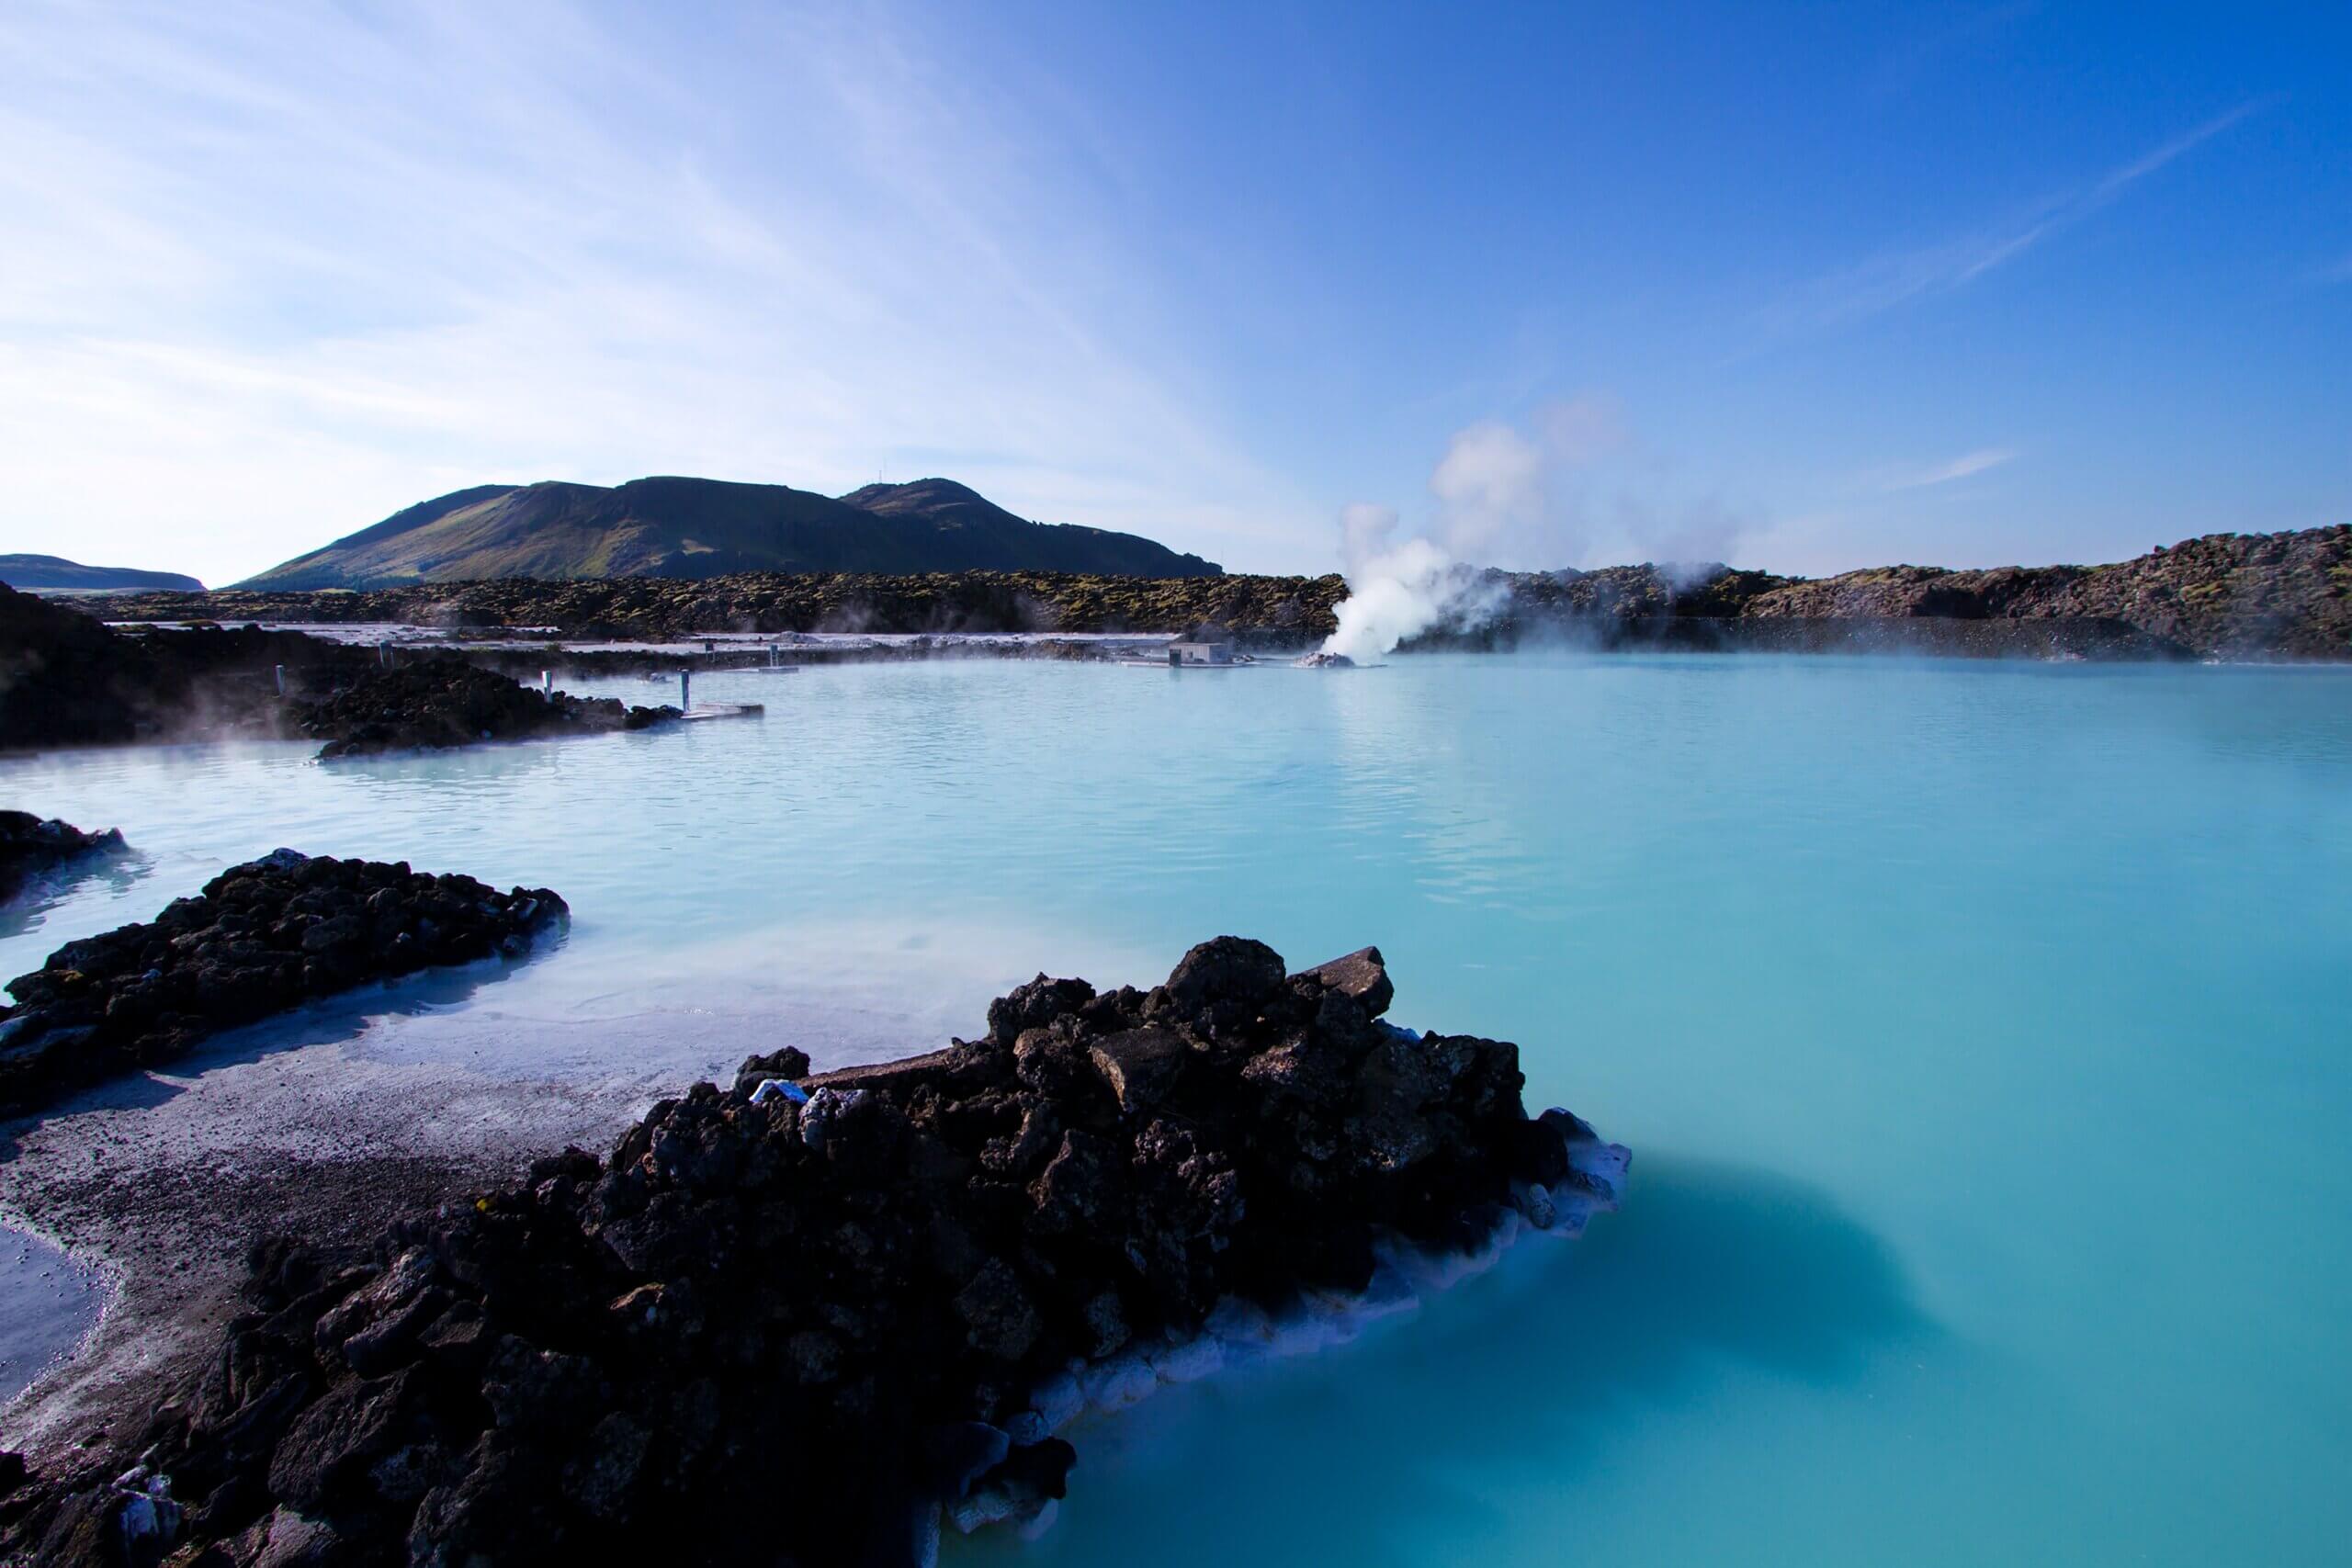 Blue Lagoon Geothermal Spa by F D via Unsplash